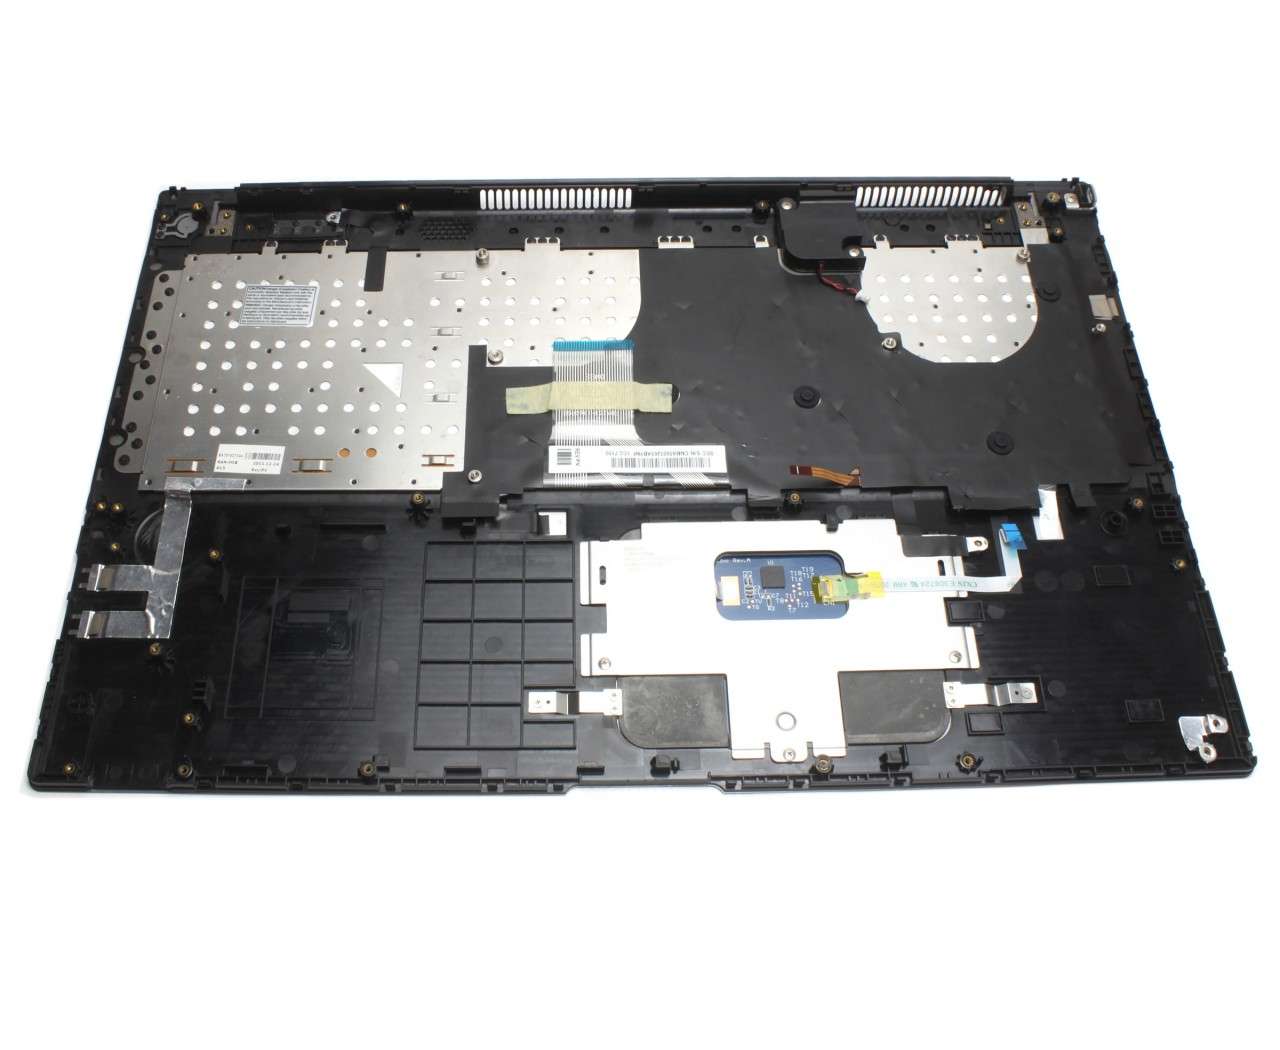 Tastatura Samsung BA75 03734A neagra cu Palmrest gri iluminata backlit cu Touchpad imagine 2021 powerlaptop.ro